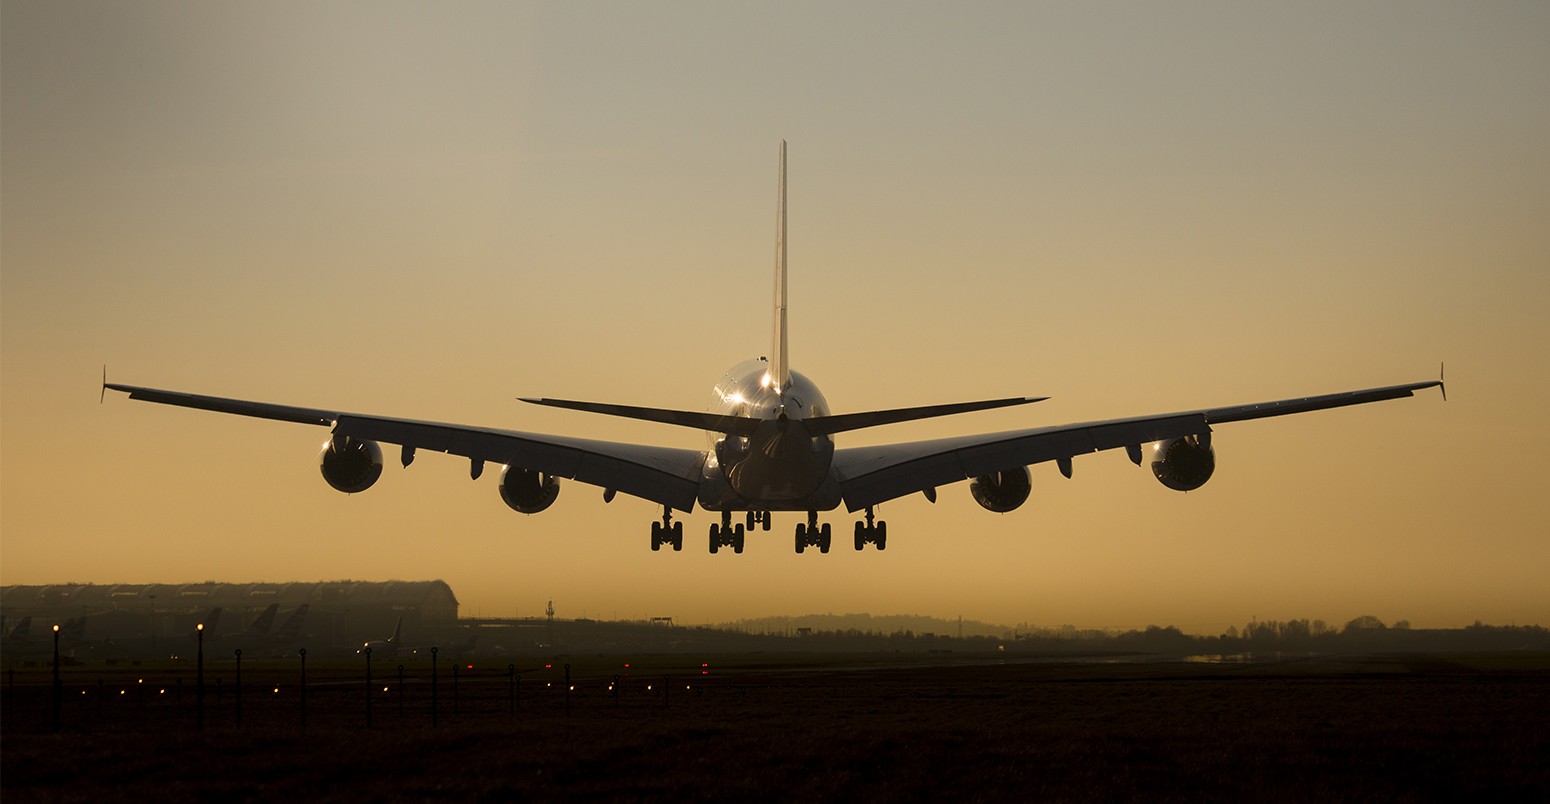 Aircraft landing at Heathrow